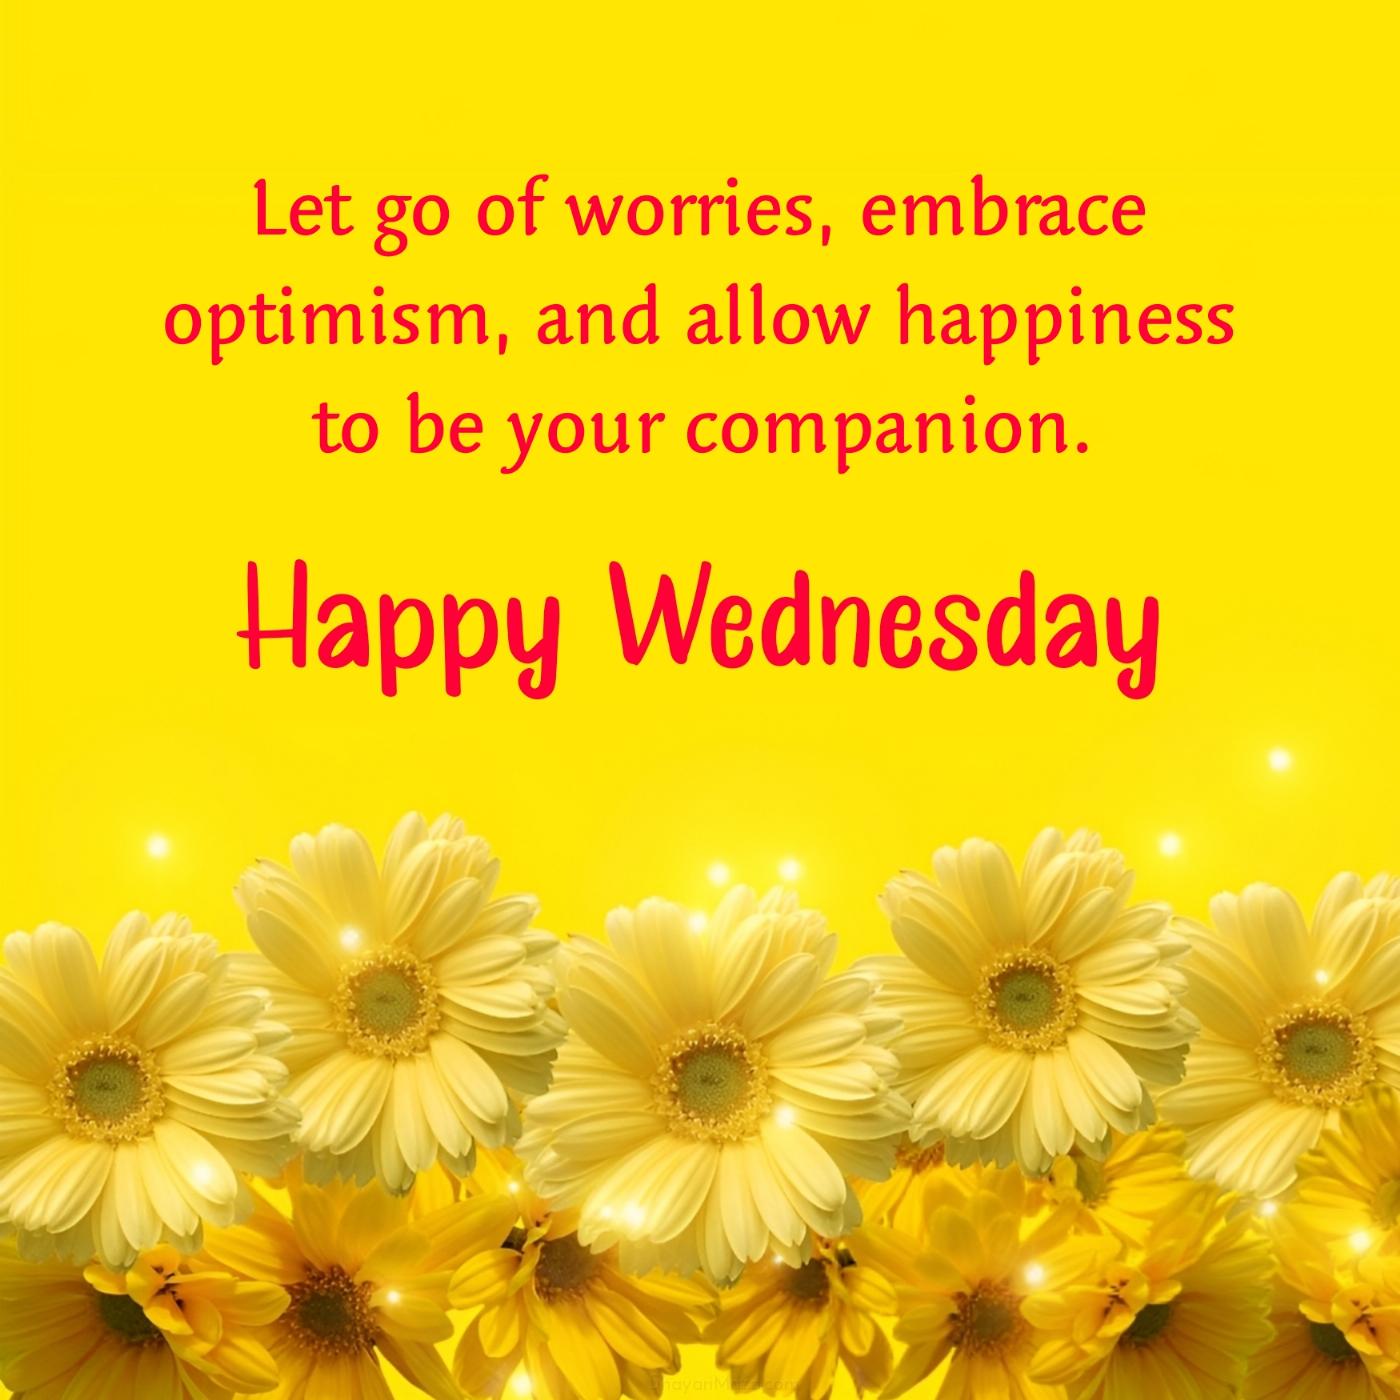 Happy Wednesday! Let go of worries embrace optimism